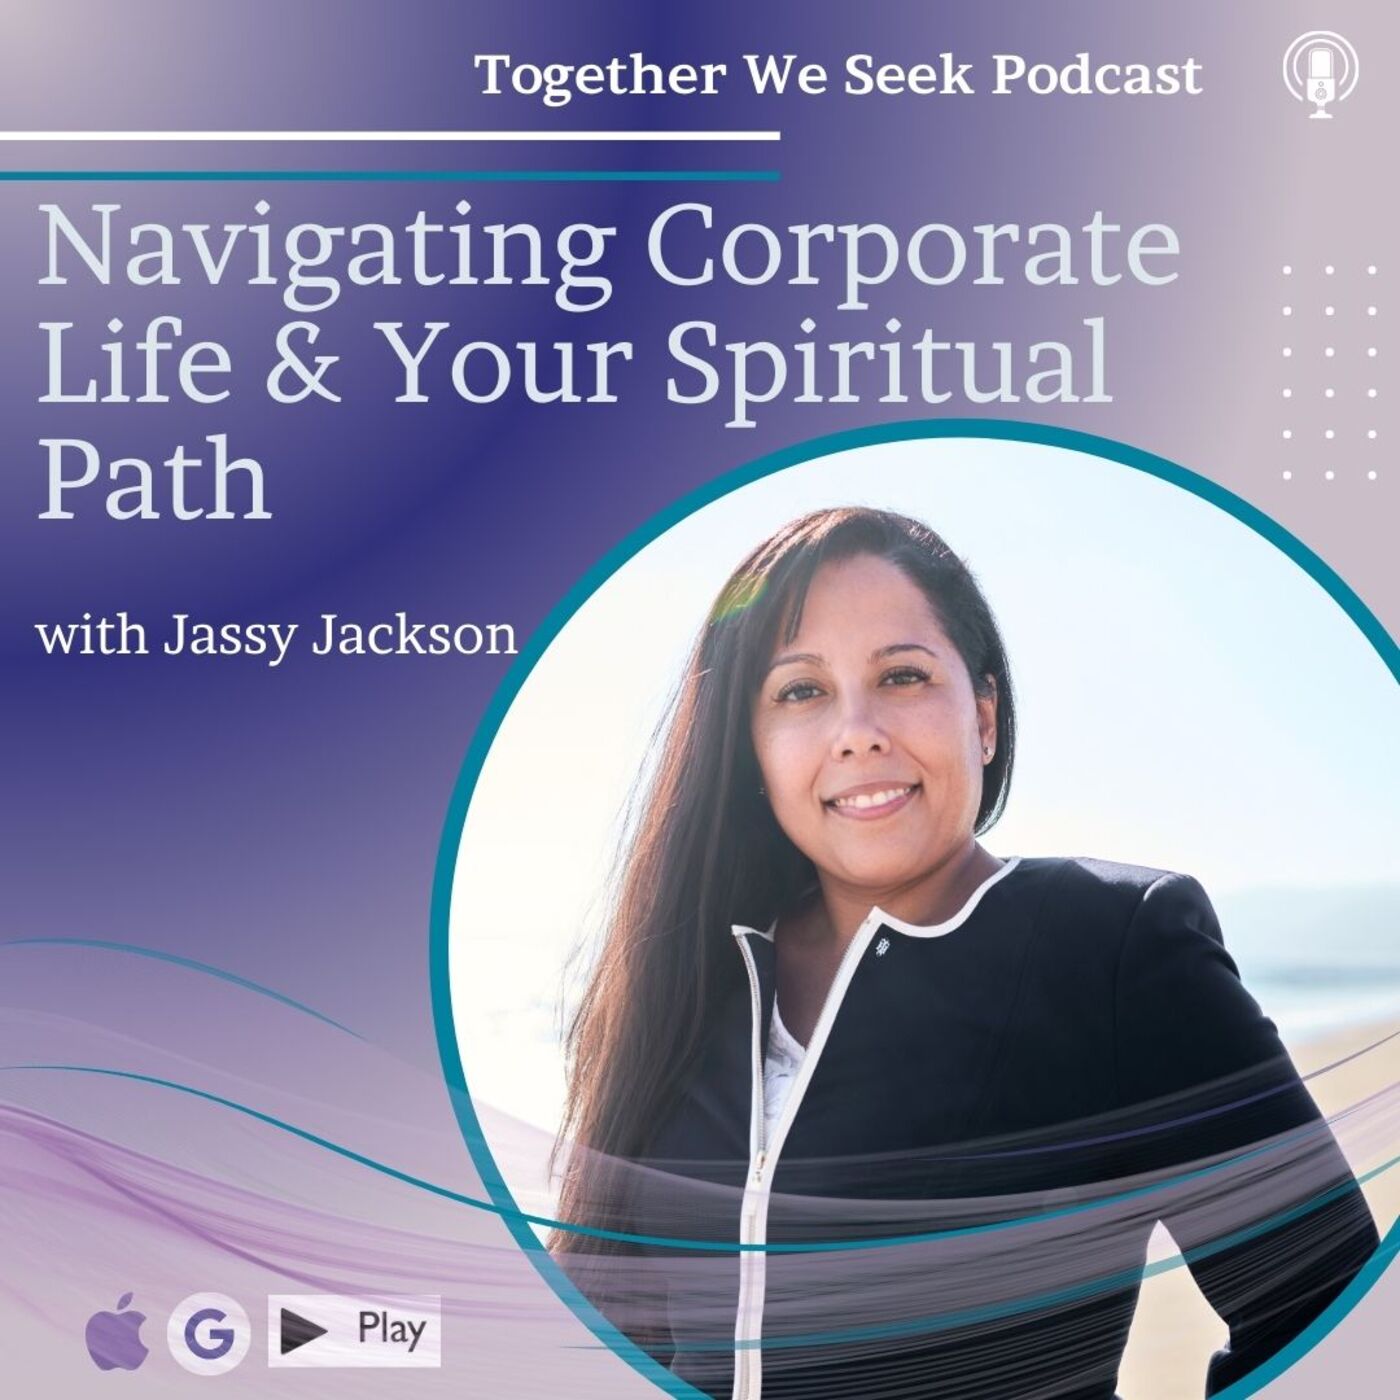 Navigating Corporate Life & Your Spiritual Path with Jesse Jackson